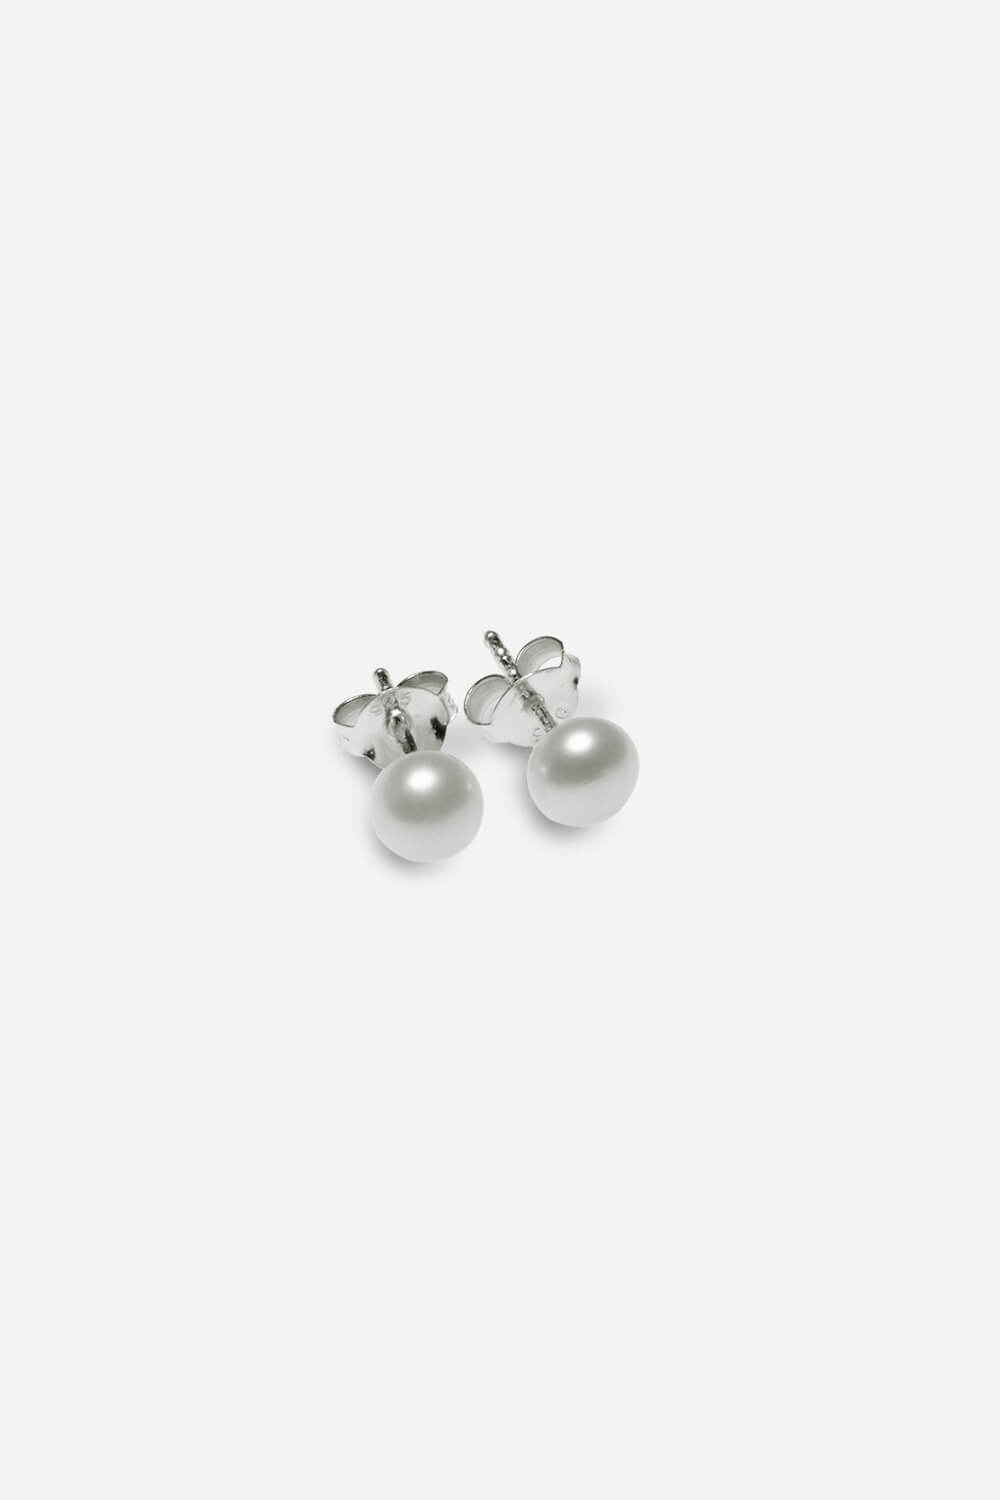 5mm Fresh Water Pearl Sterling Silver Stud Earring